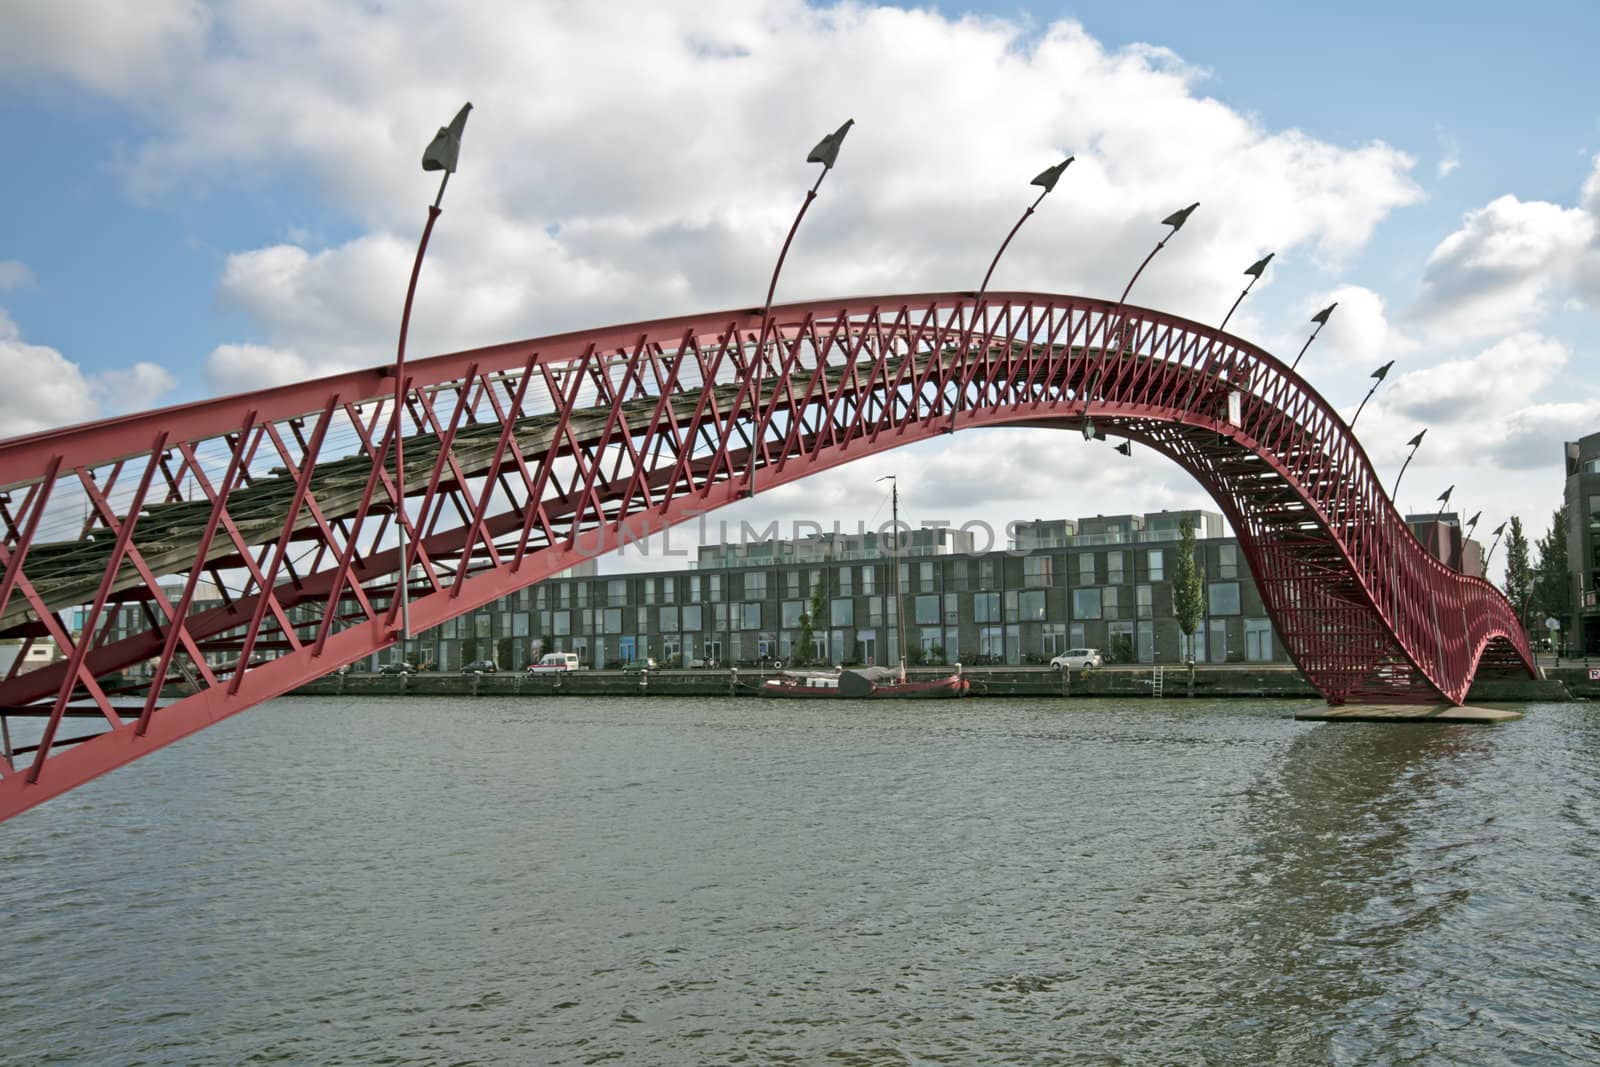 Python bridge in Amsterdam the Netherlands by devy